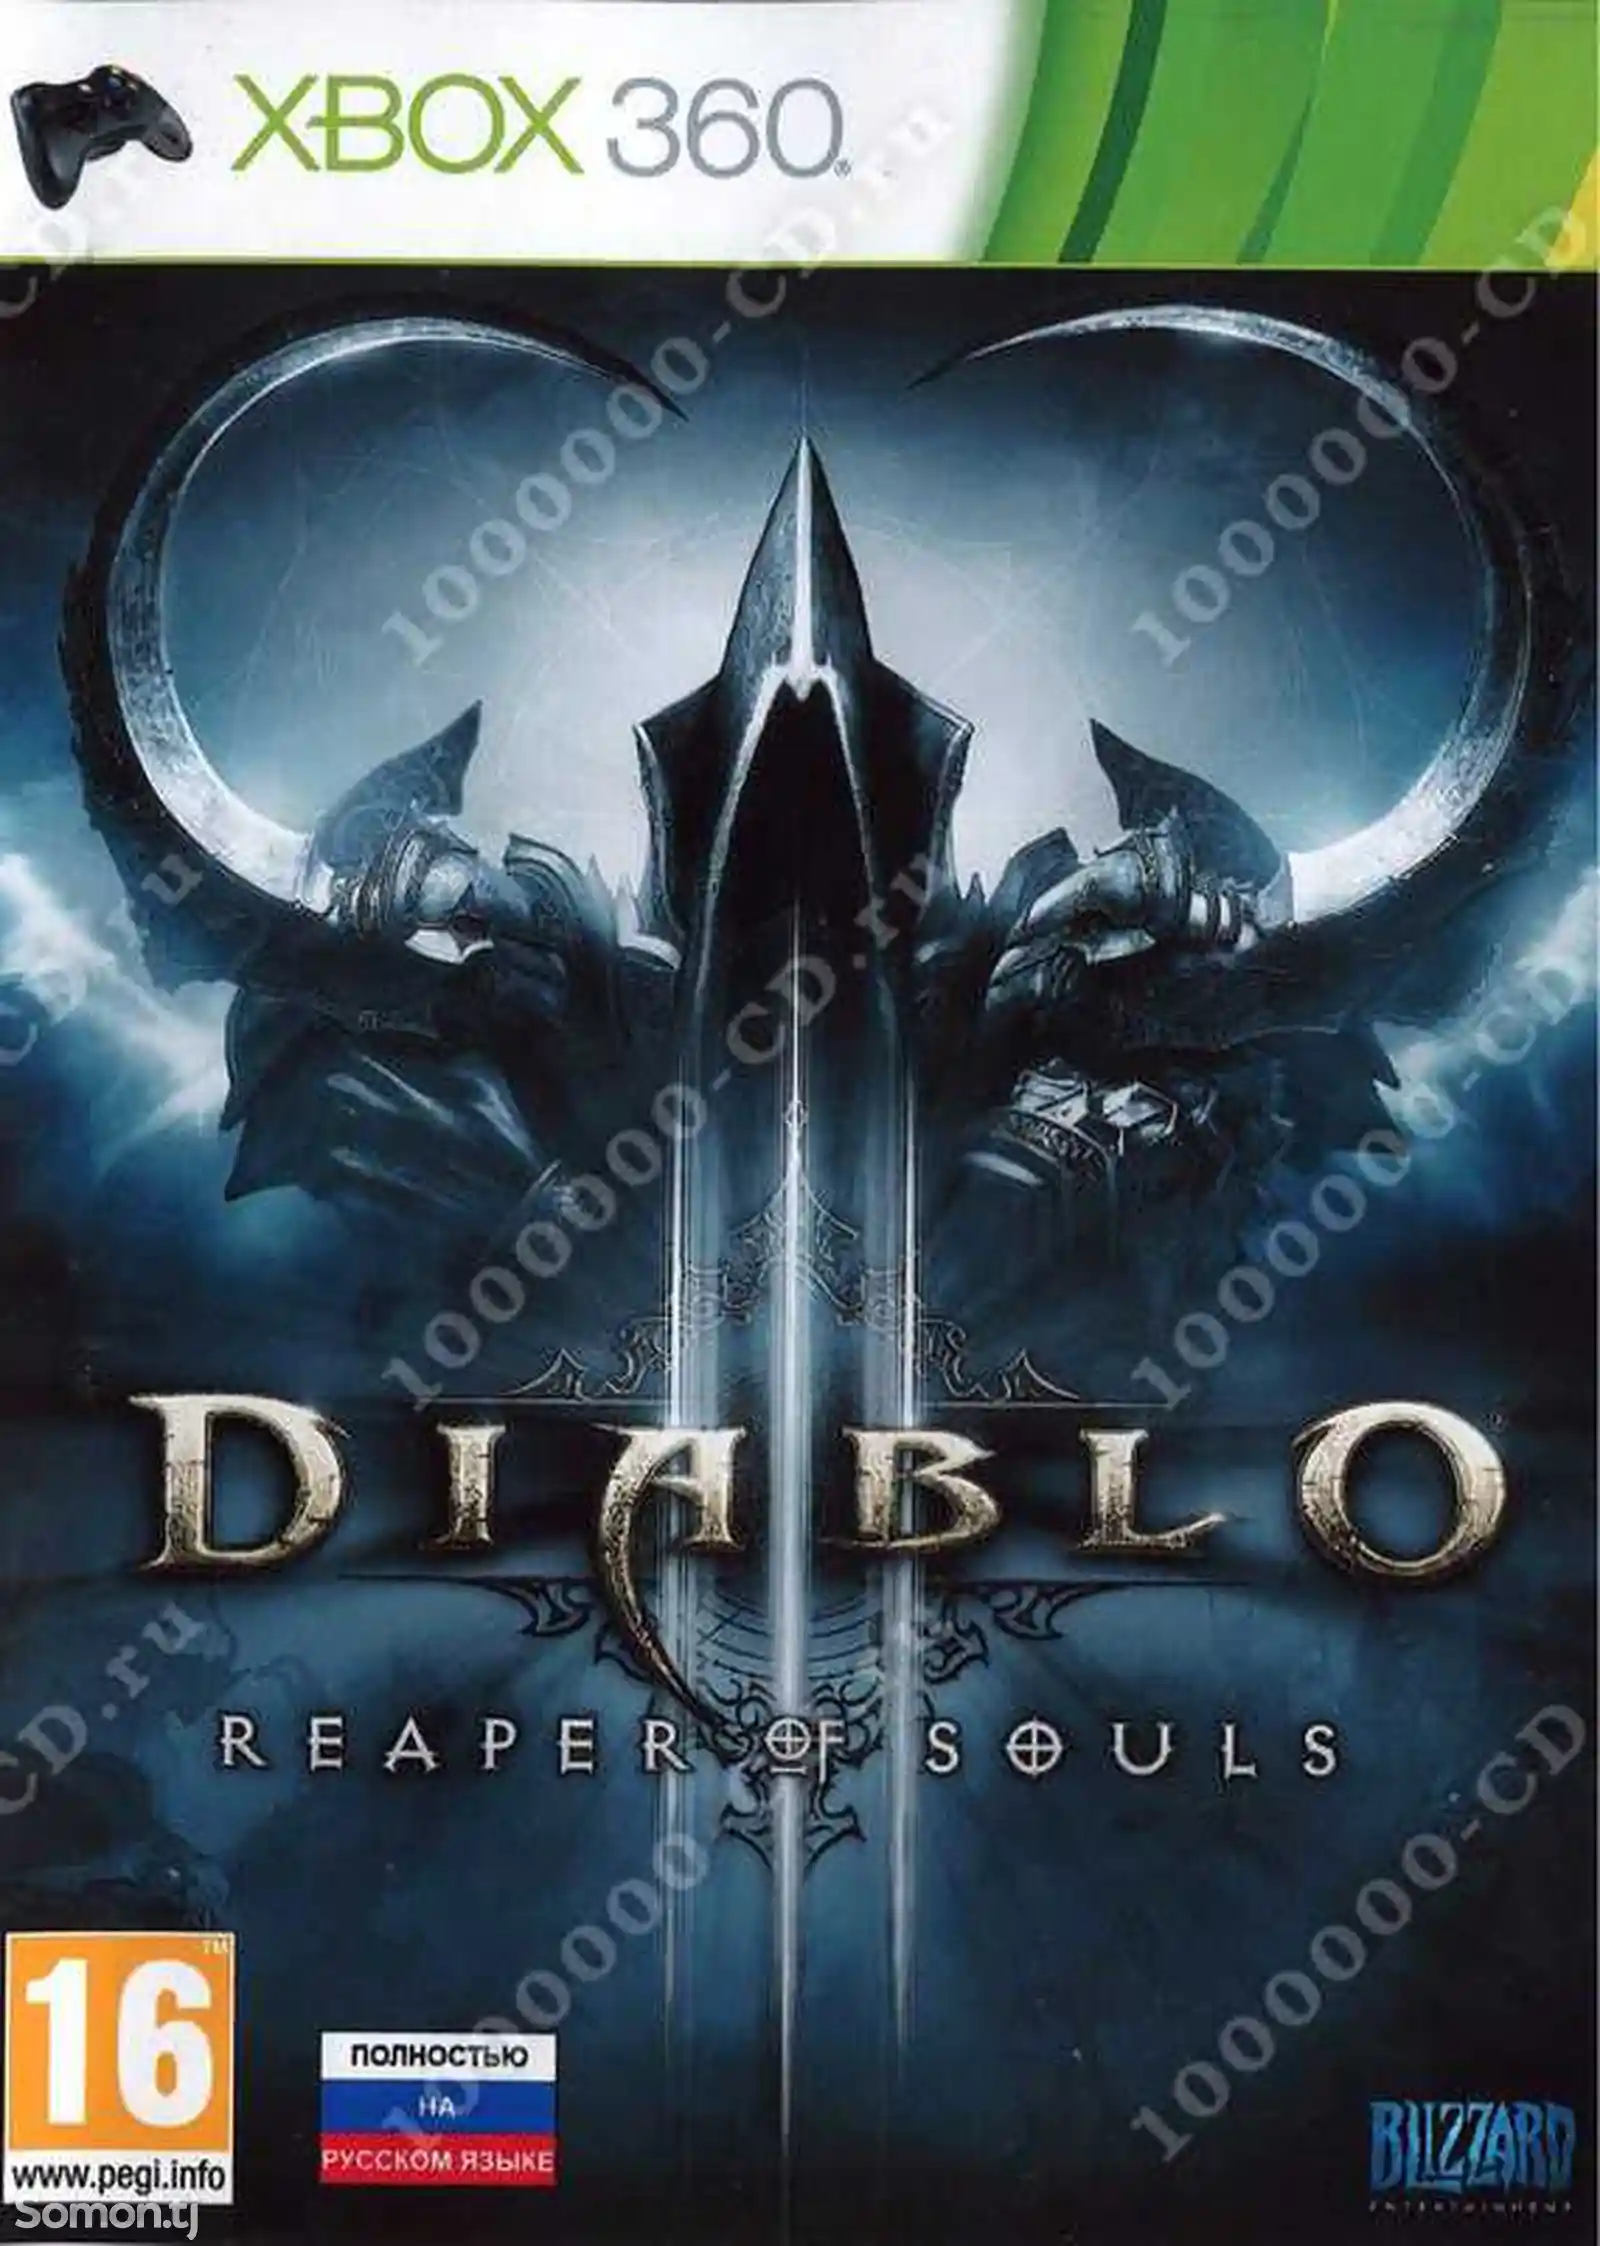 Игра Diablo 3 reaper of souls для прошитых Xbox 360